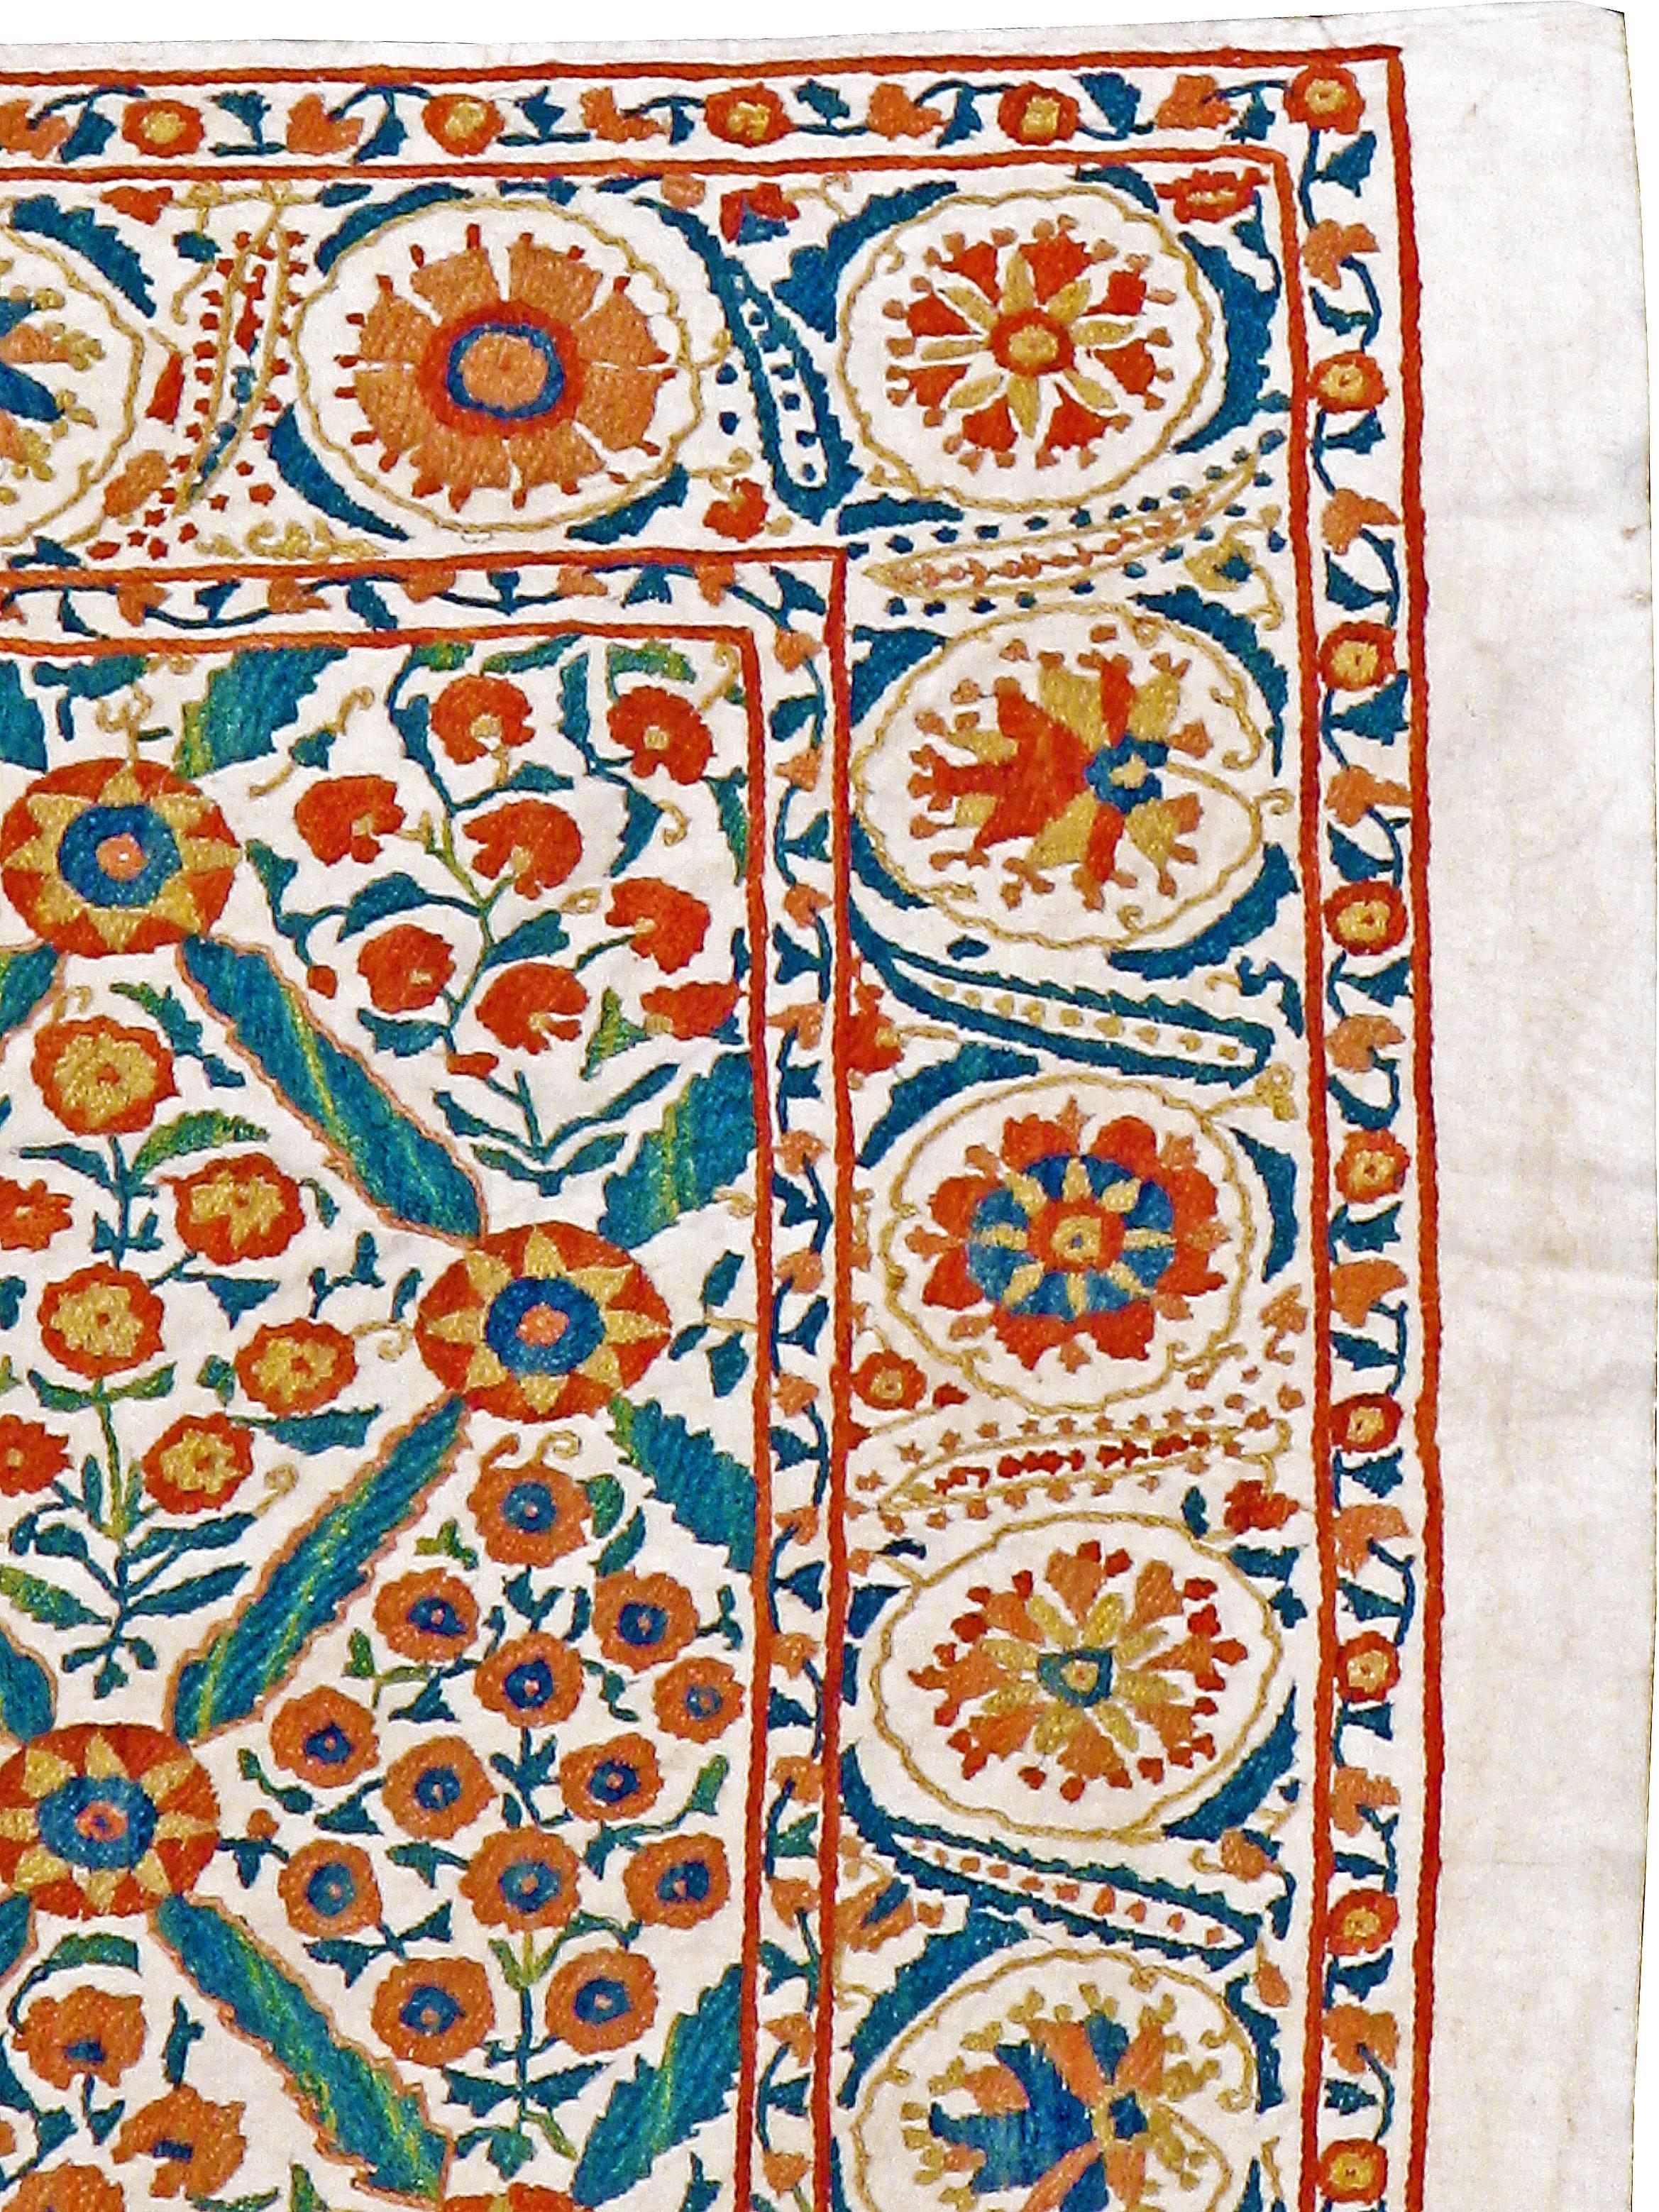 A vintage Uzbek Suzani (needlepoint) textile from the mid-20th century.